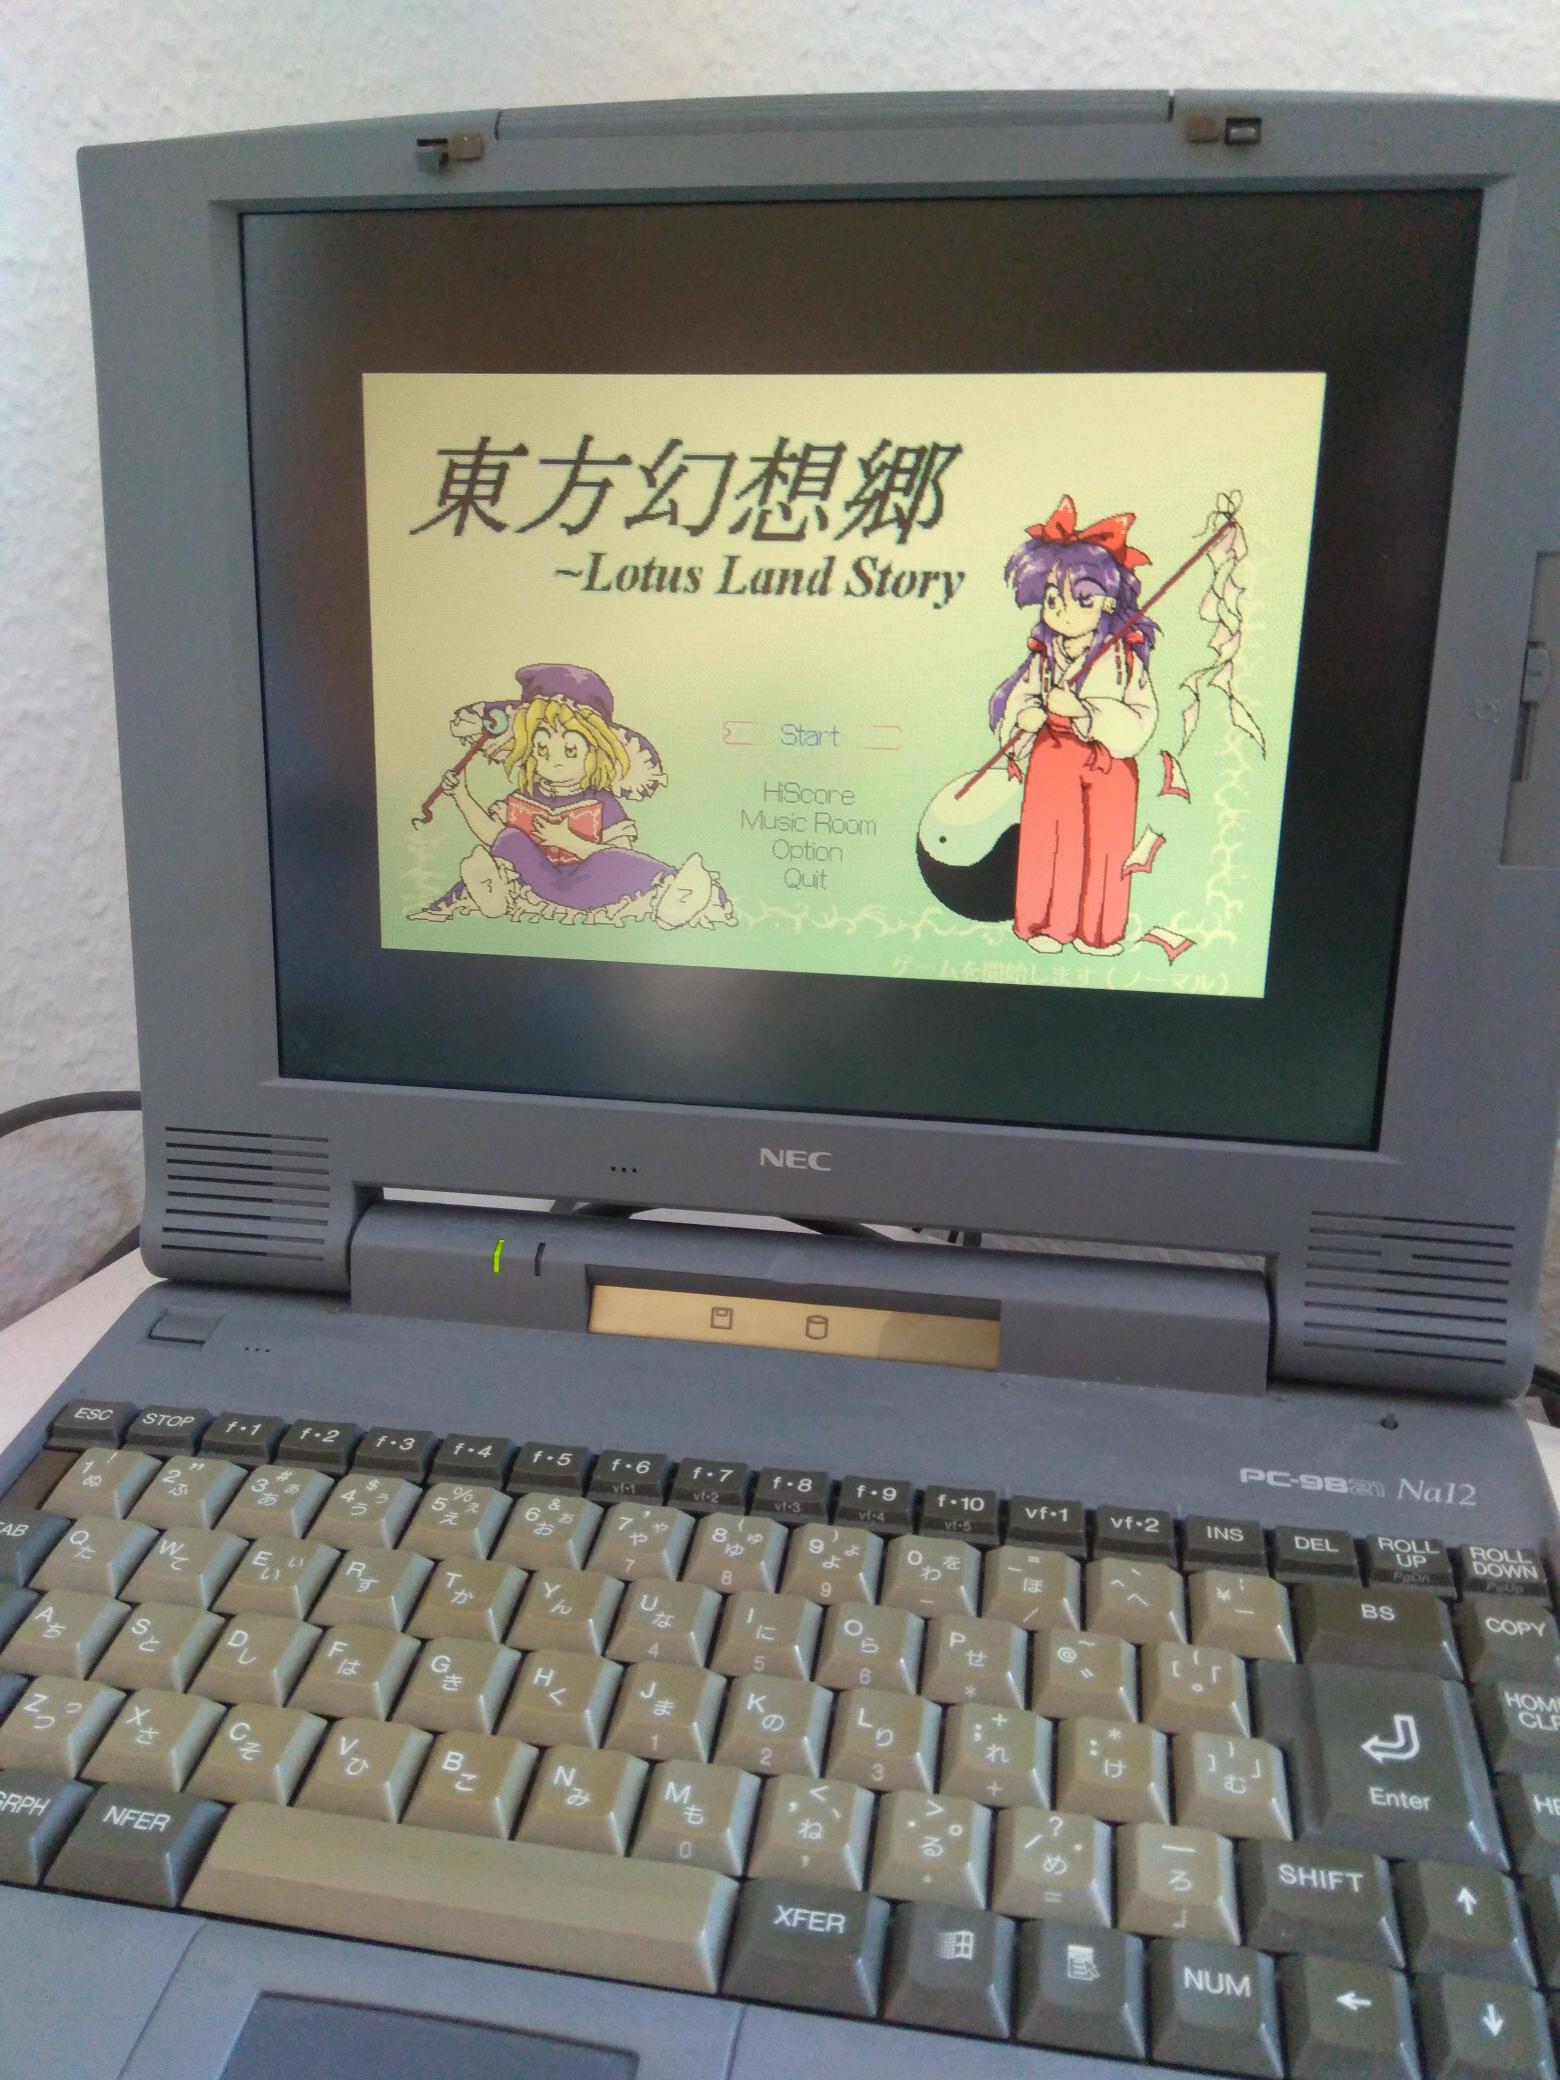 Running Touhou Games on a PC98 Laptop | Lainblog